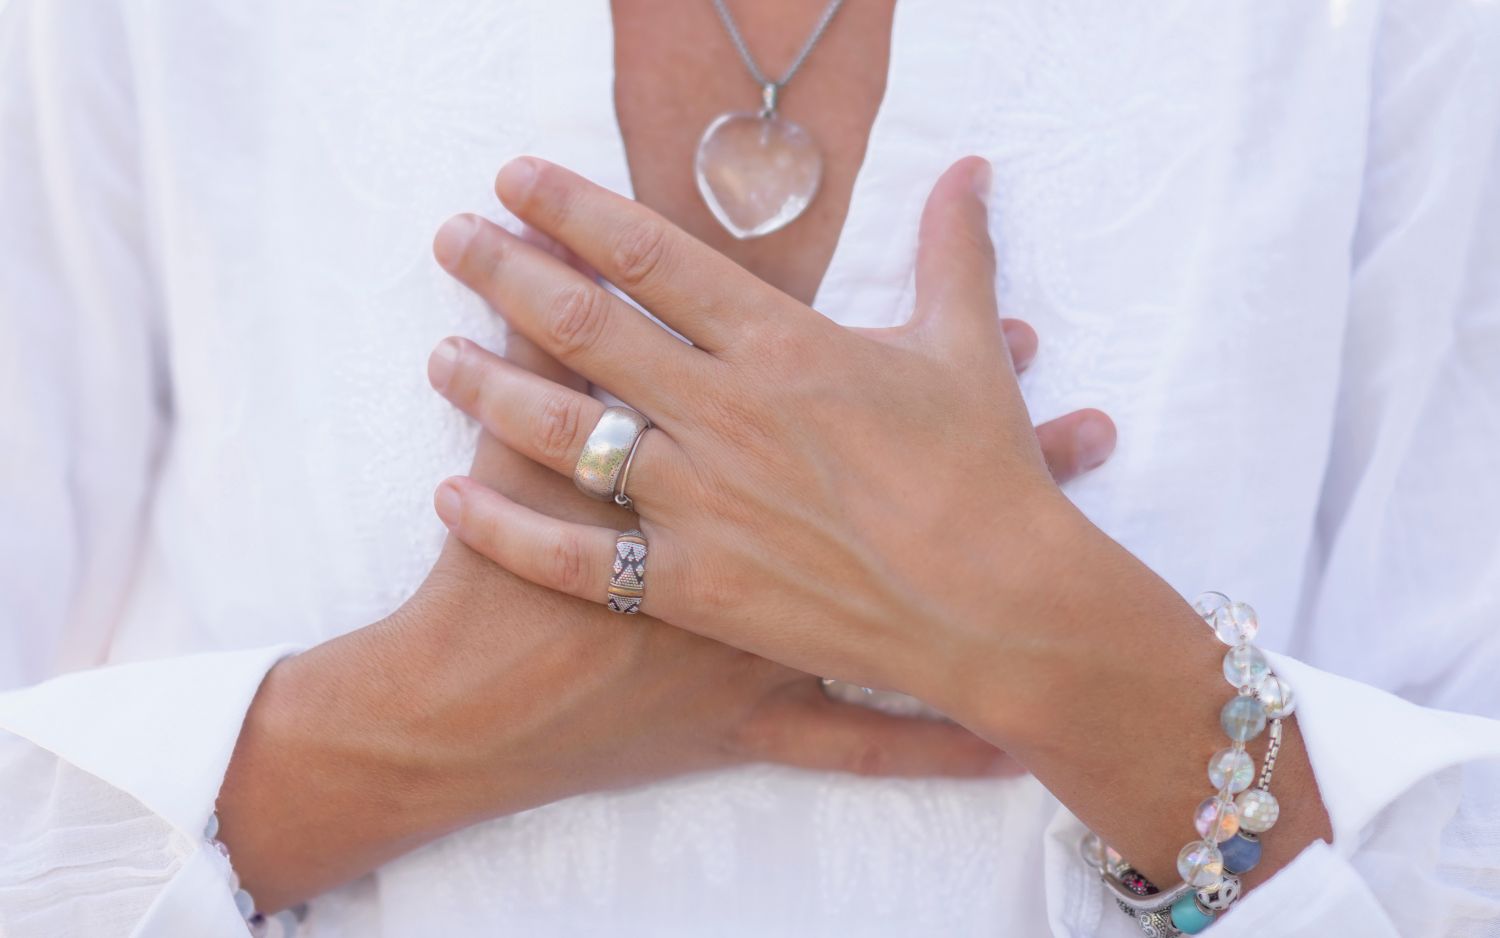 Spiritual Benefits of Wearing a Copper Bracelet